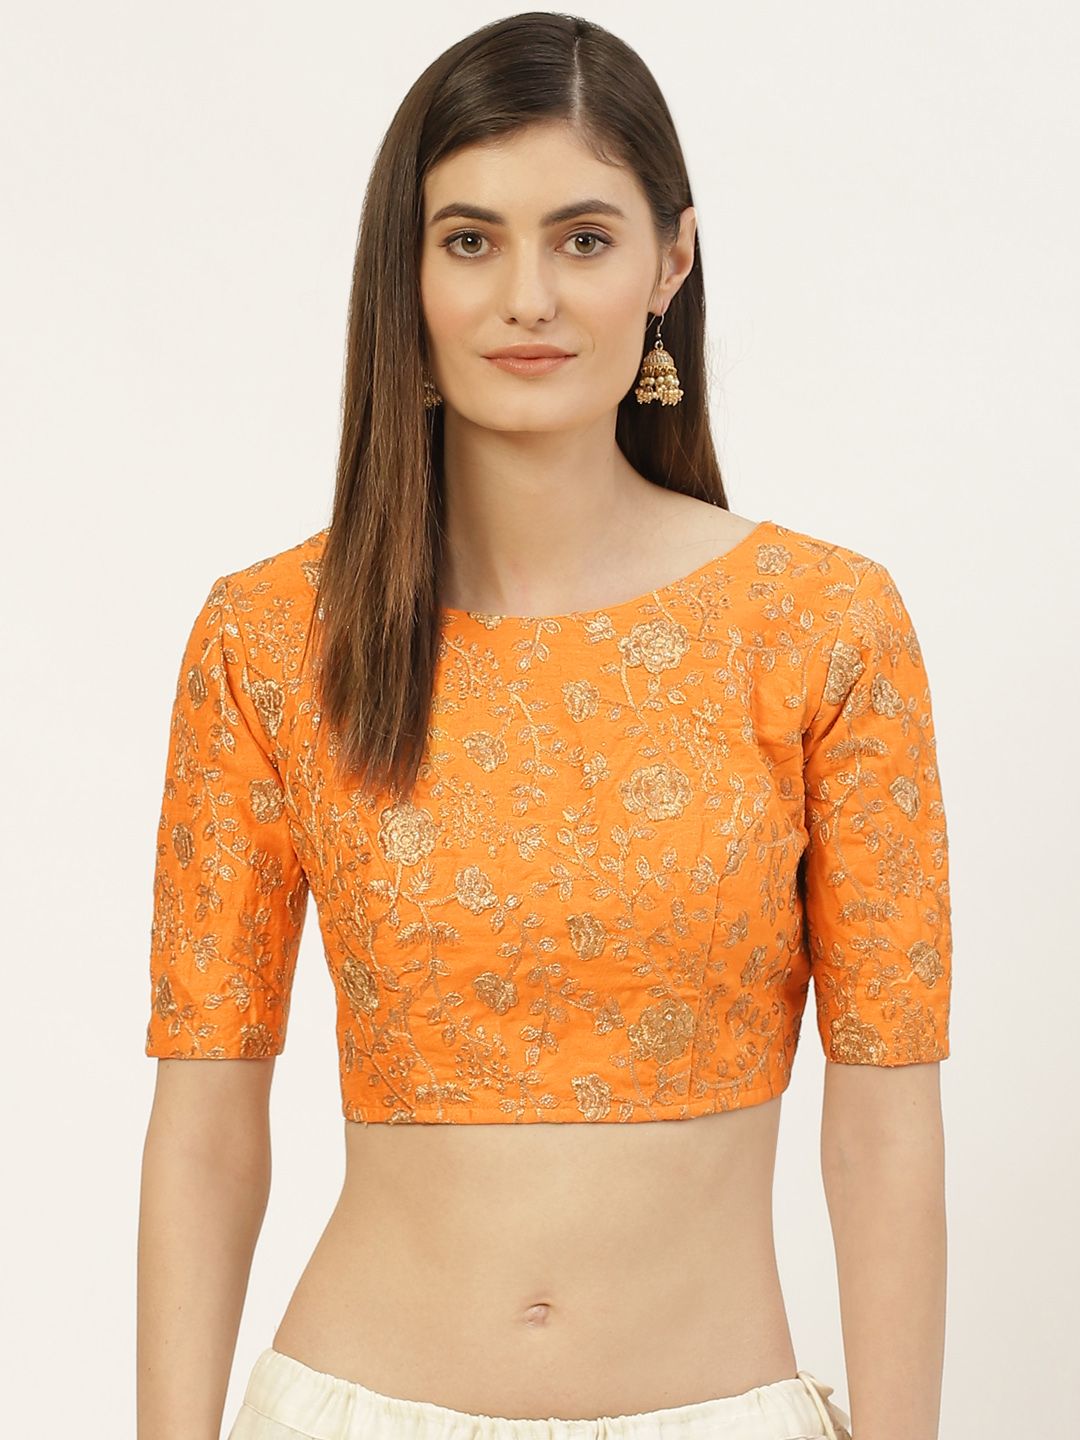 Studio Shringaar Orange & Golden Zari Embroidered Saree Blouse Price in India